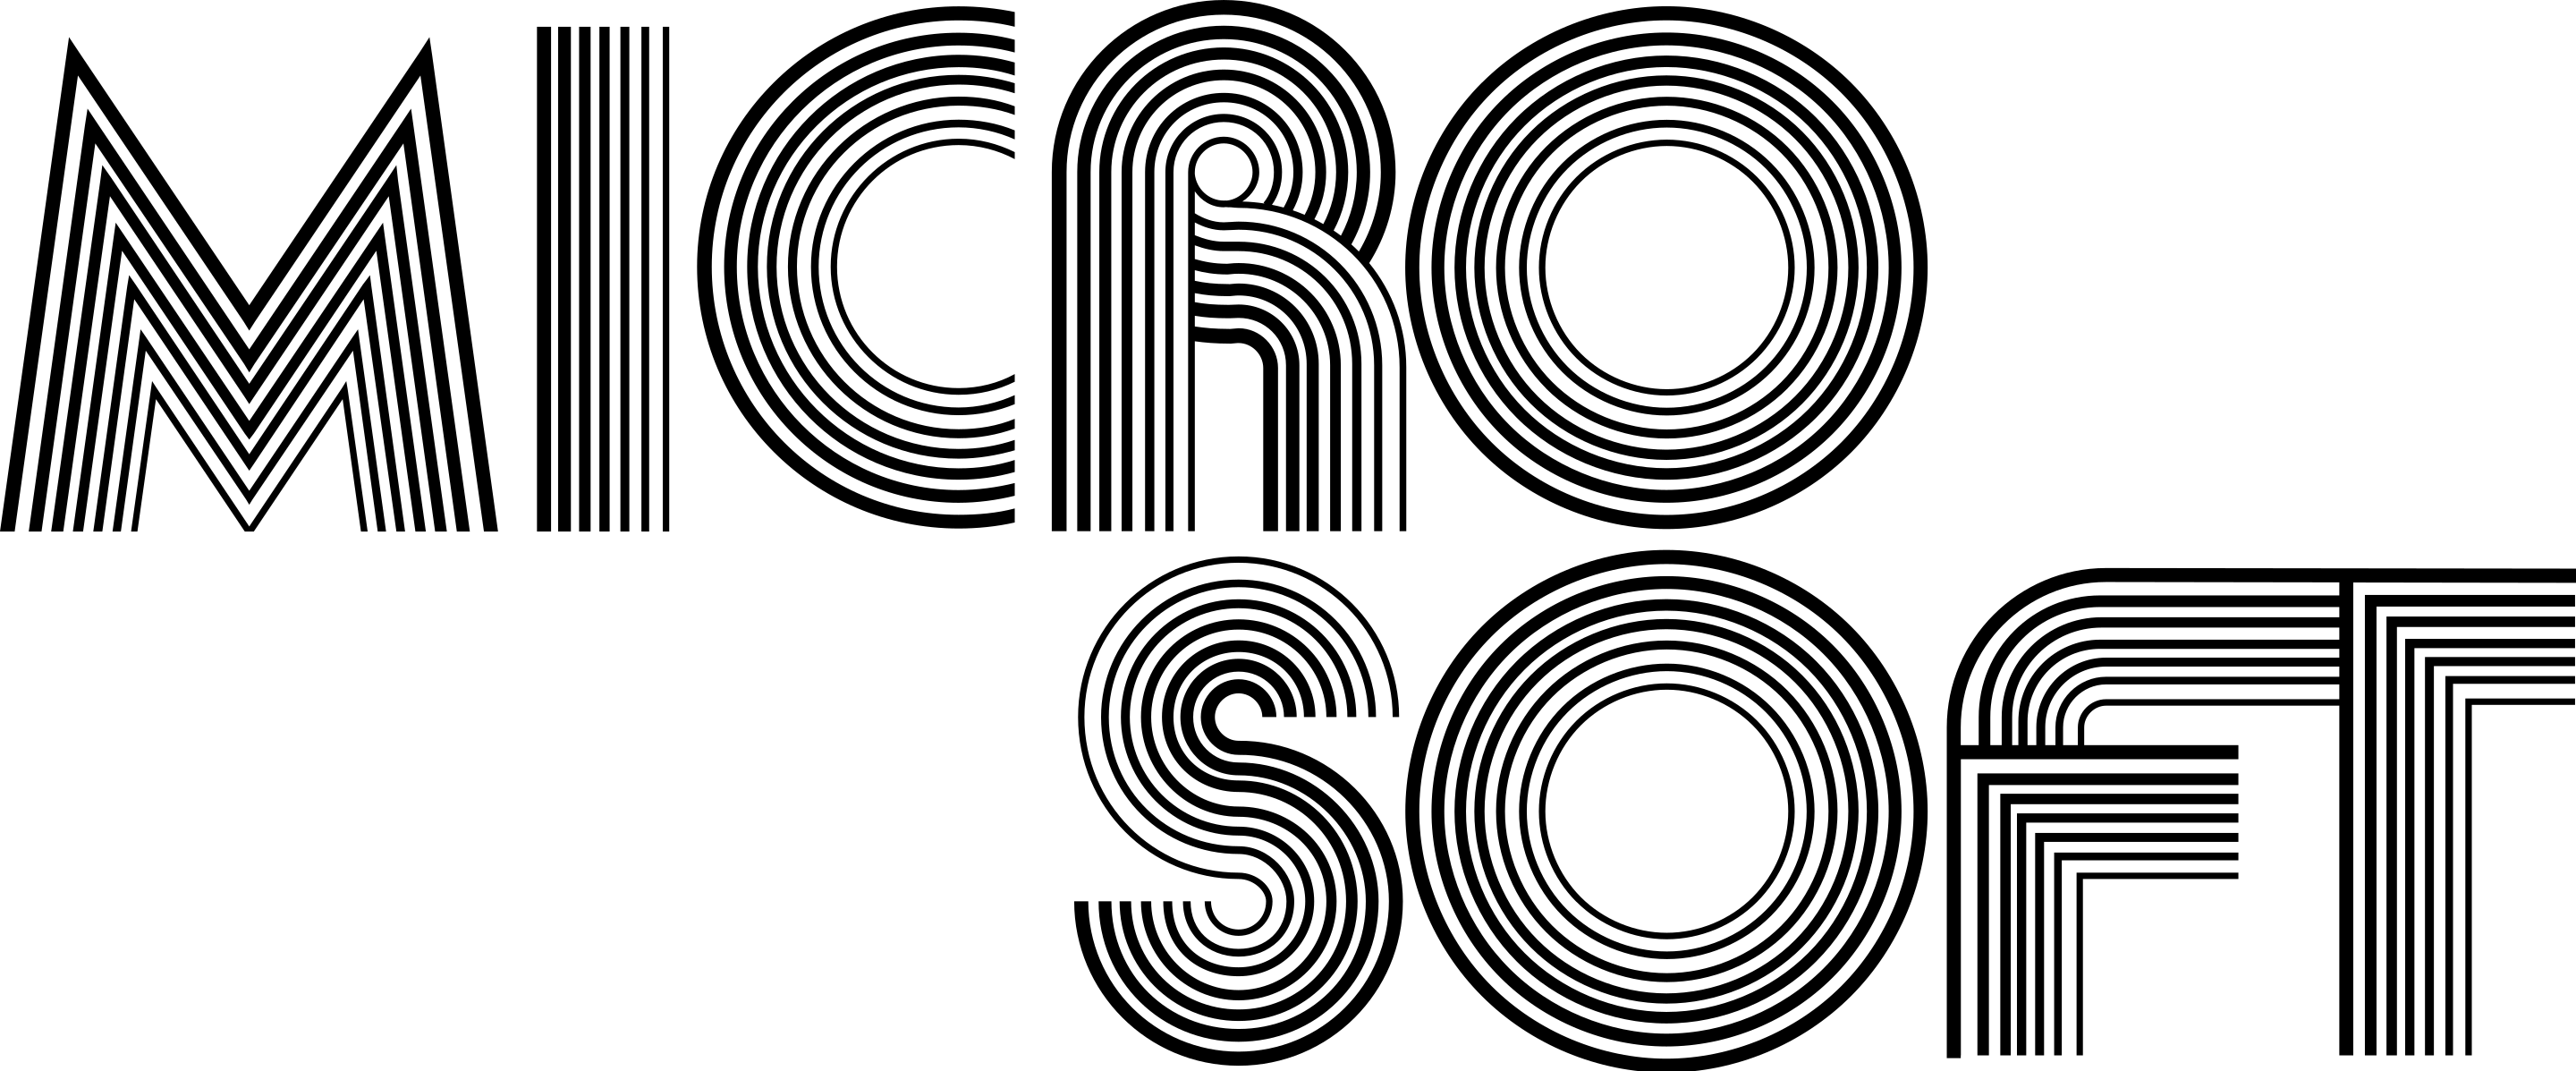 First Microsoft logo